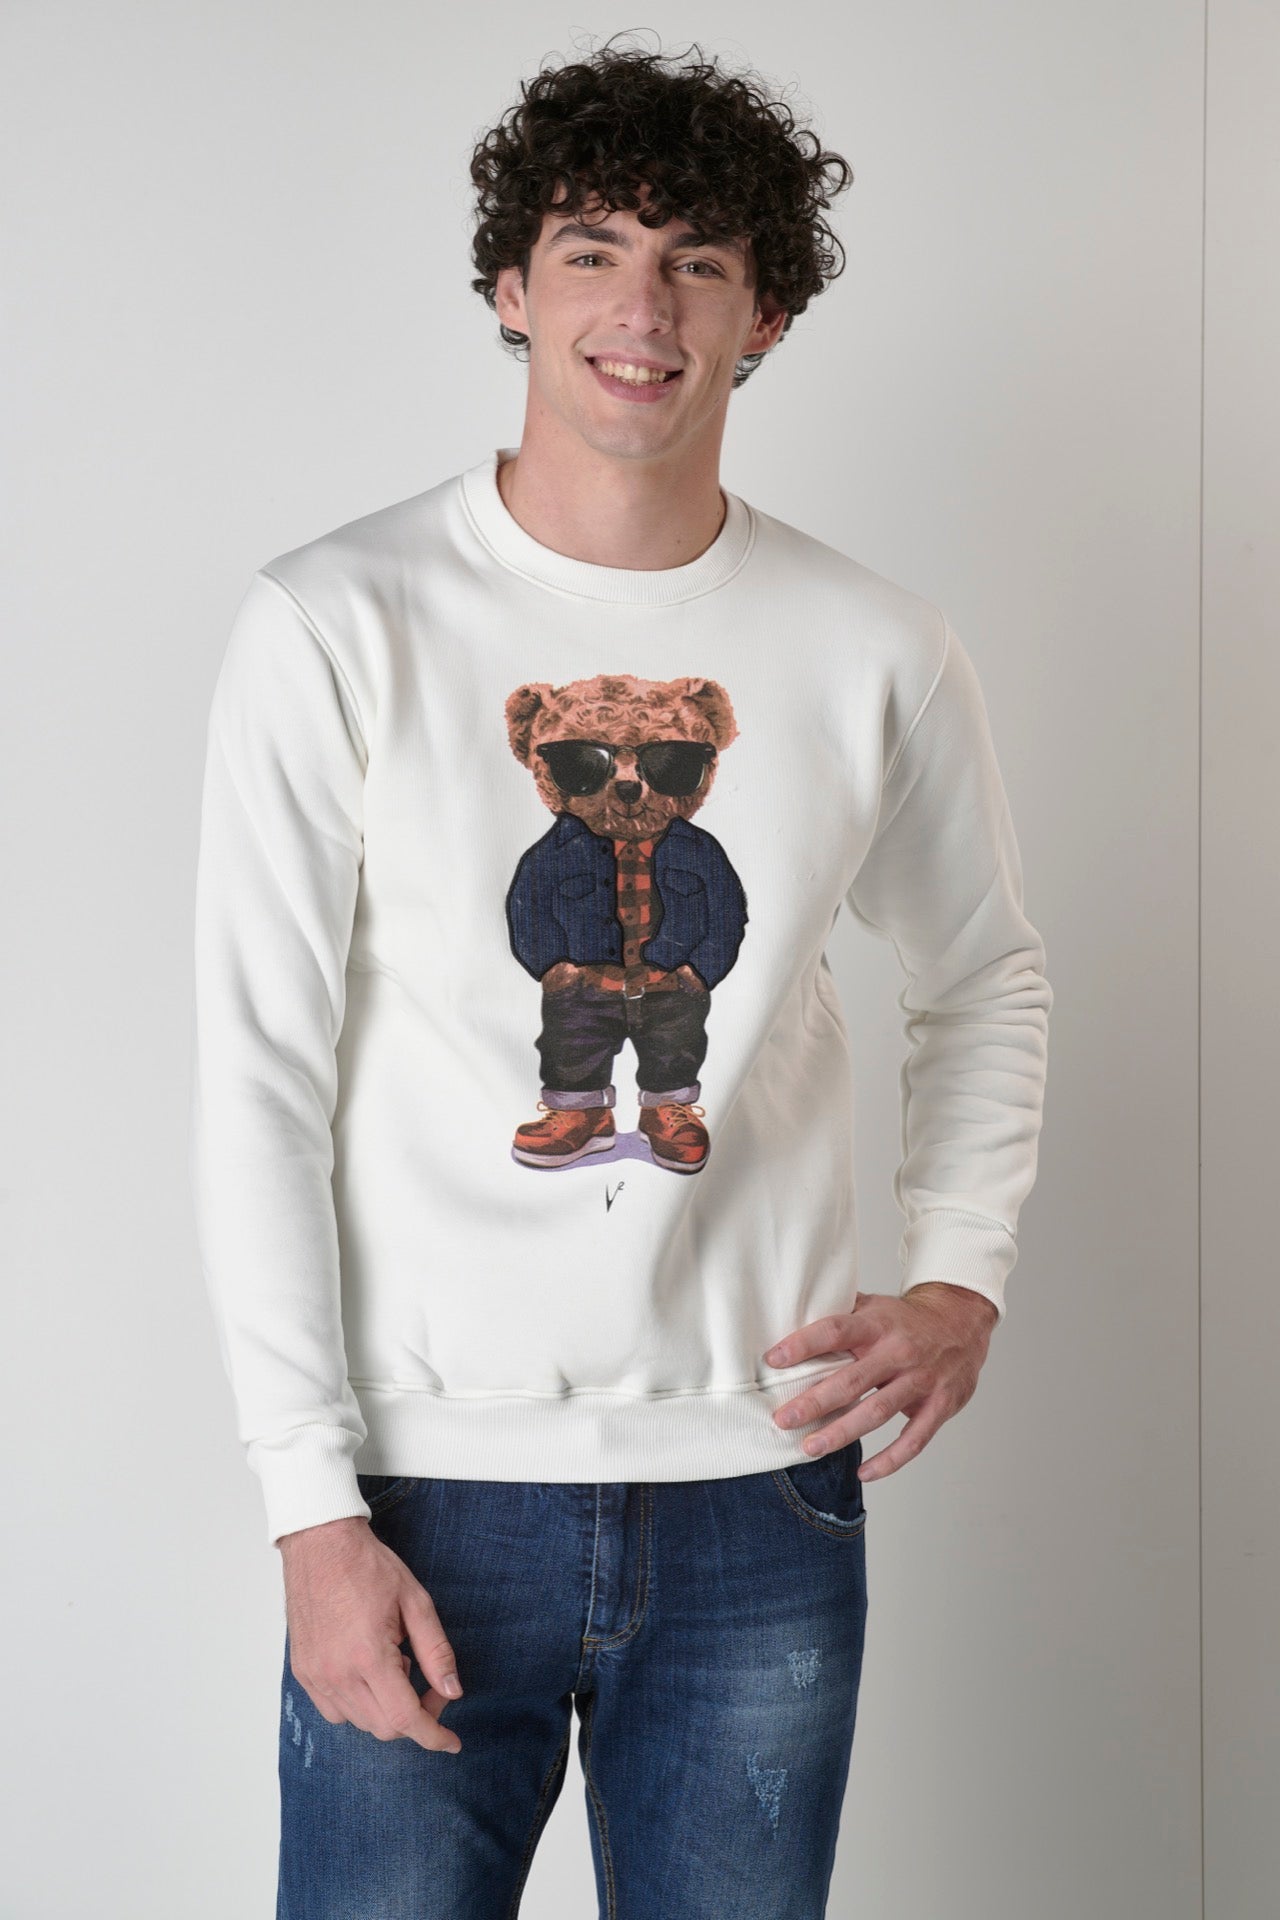 Cream sweatshirt with Teddy print and jeans fabric insert